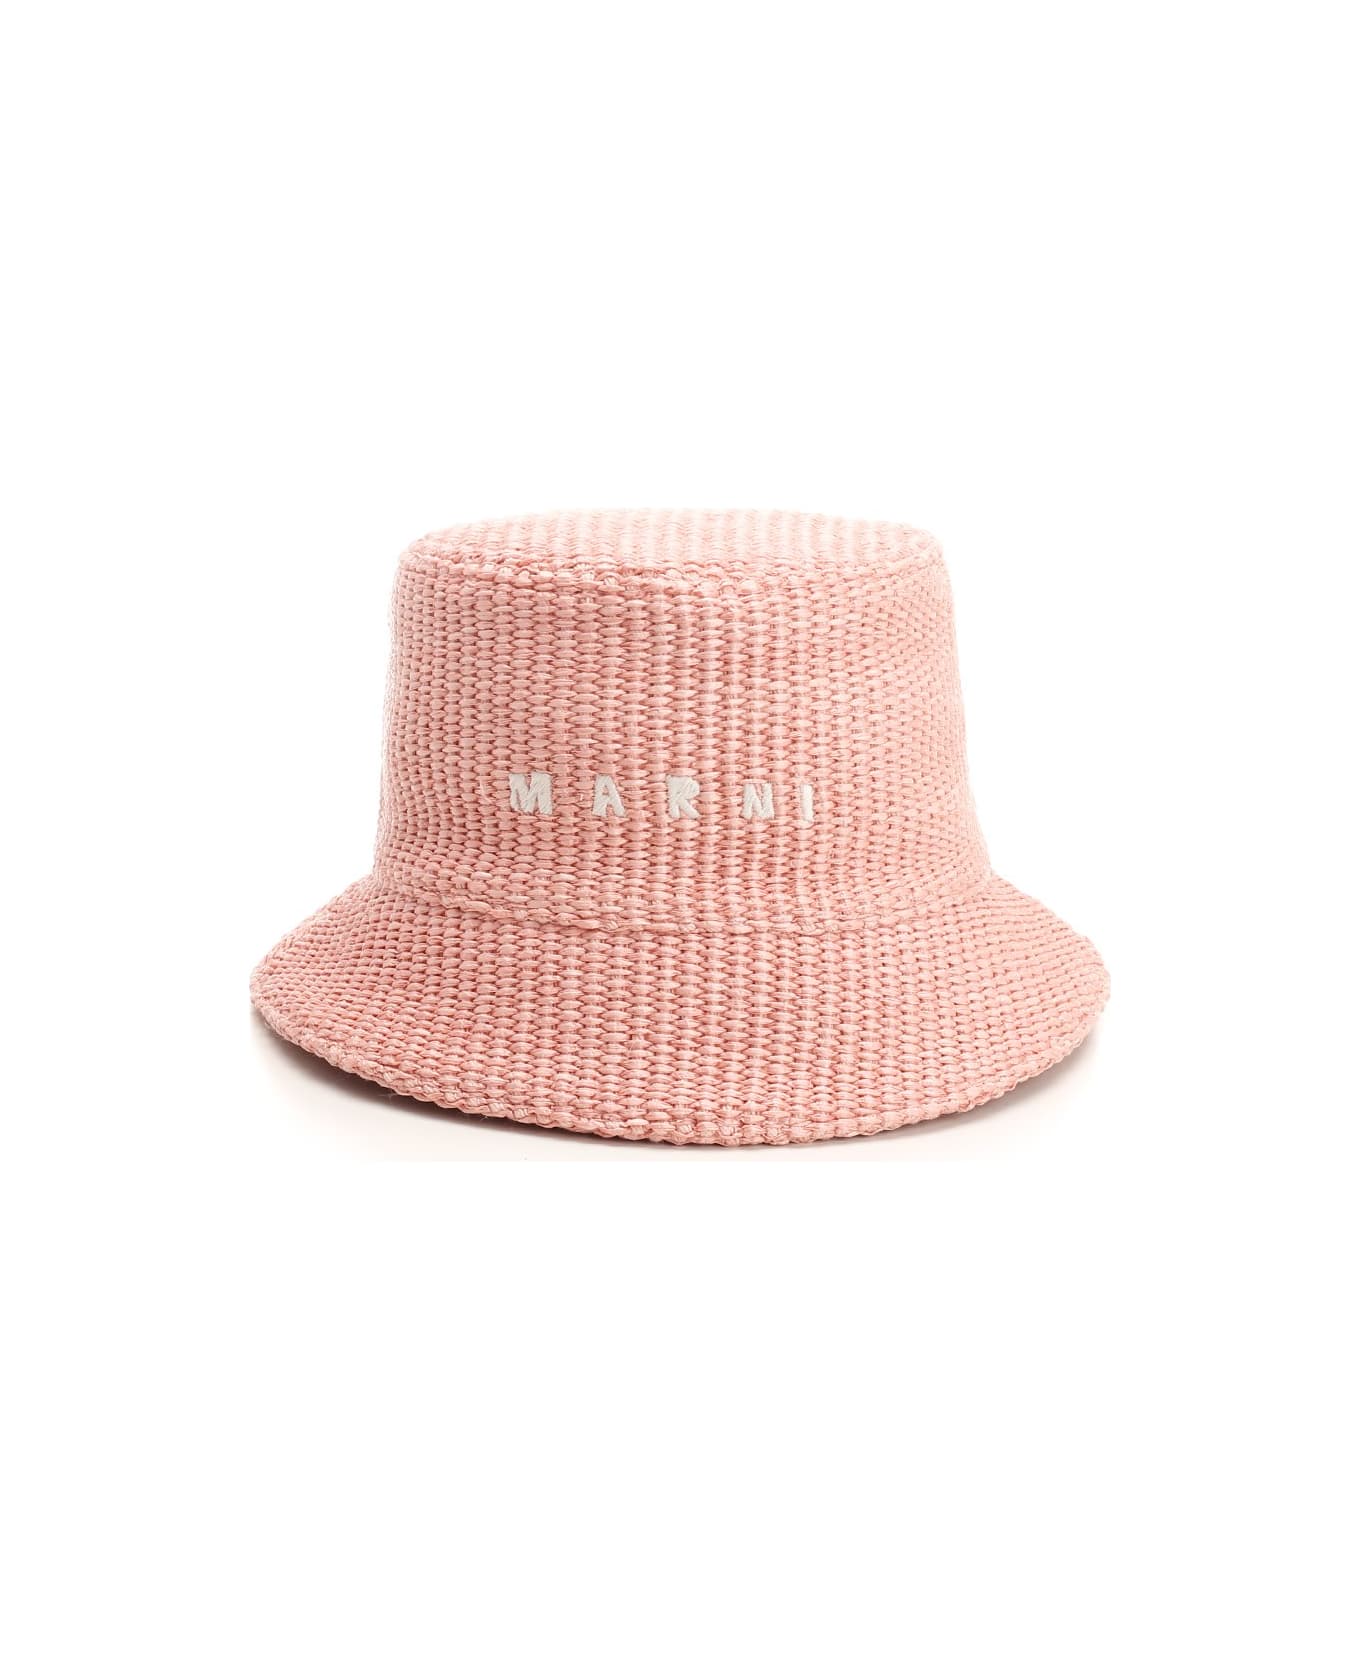 Marni Bucket Hat - PINK